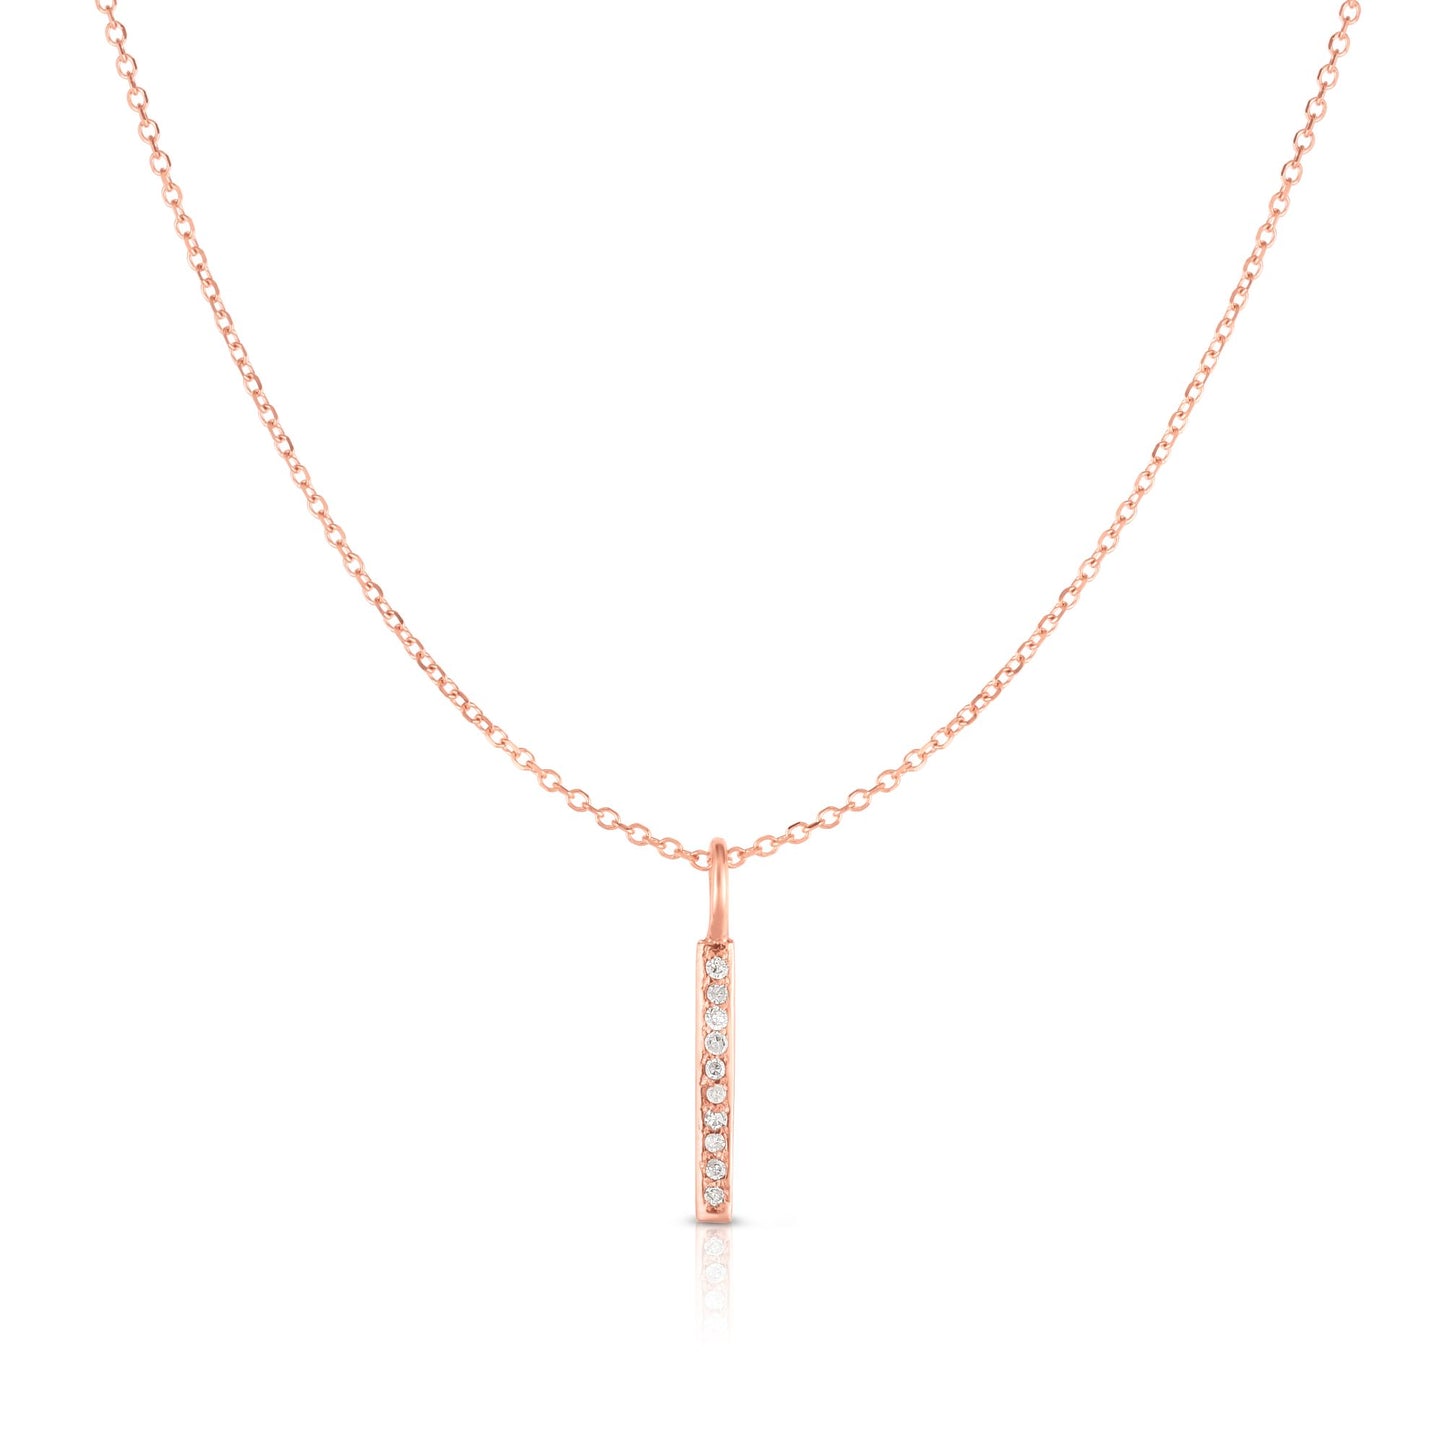 14K Gold Diamond Bar Necklace